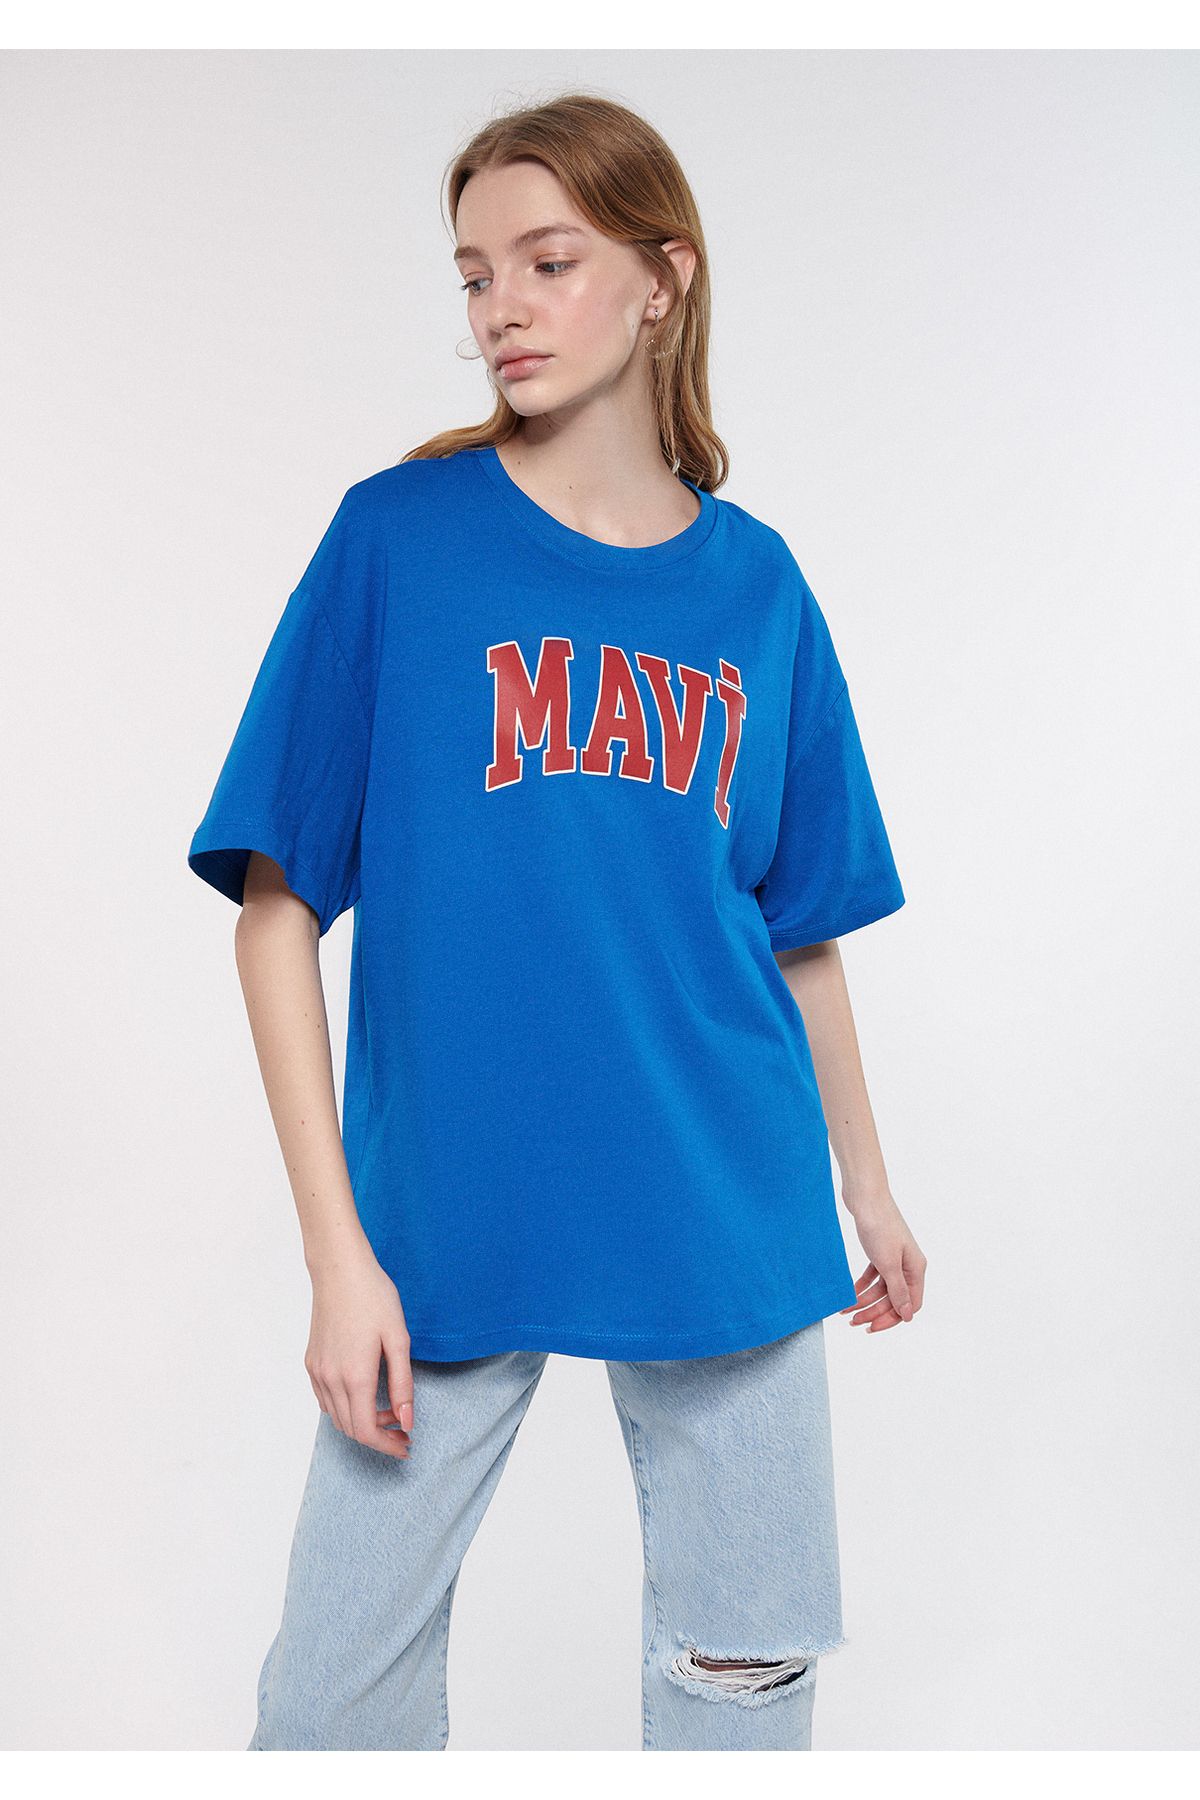 Mavi تی شرت چاپ شده با لوگو سایز بزرگ / برش عریض 1600843-70903